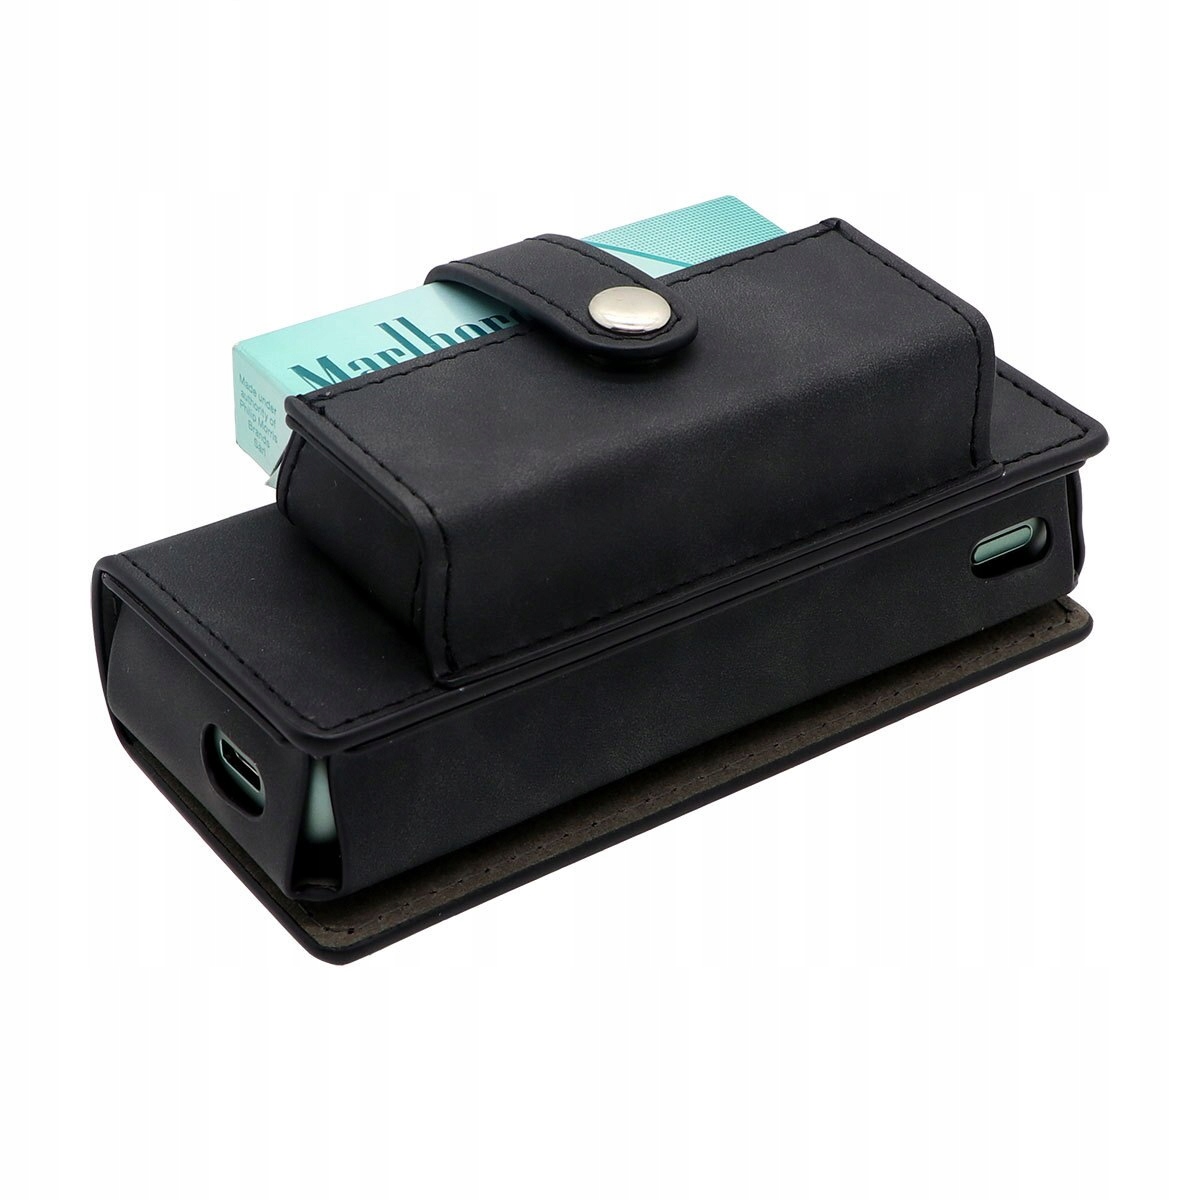 5 Color PU Leather Cover Case For IQOS iluma Prime Storage Bag Protective  Case For IQOS iluma Prime 2021 New Arrival - We Love Offers